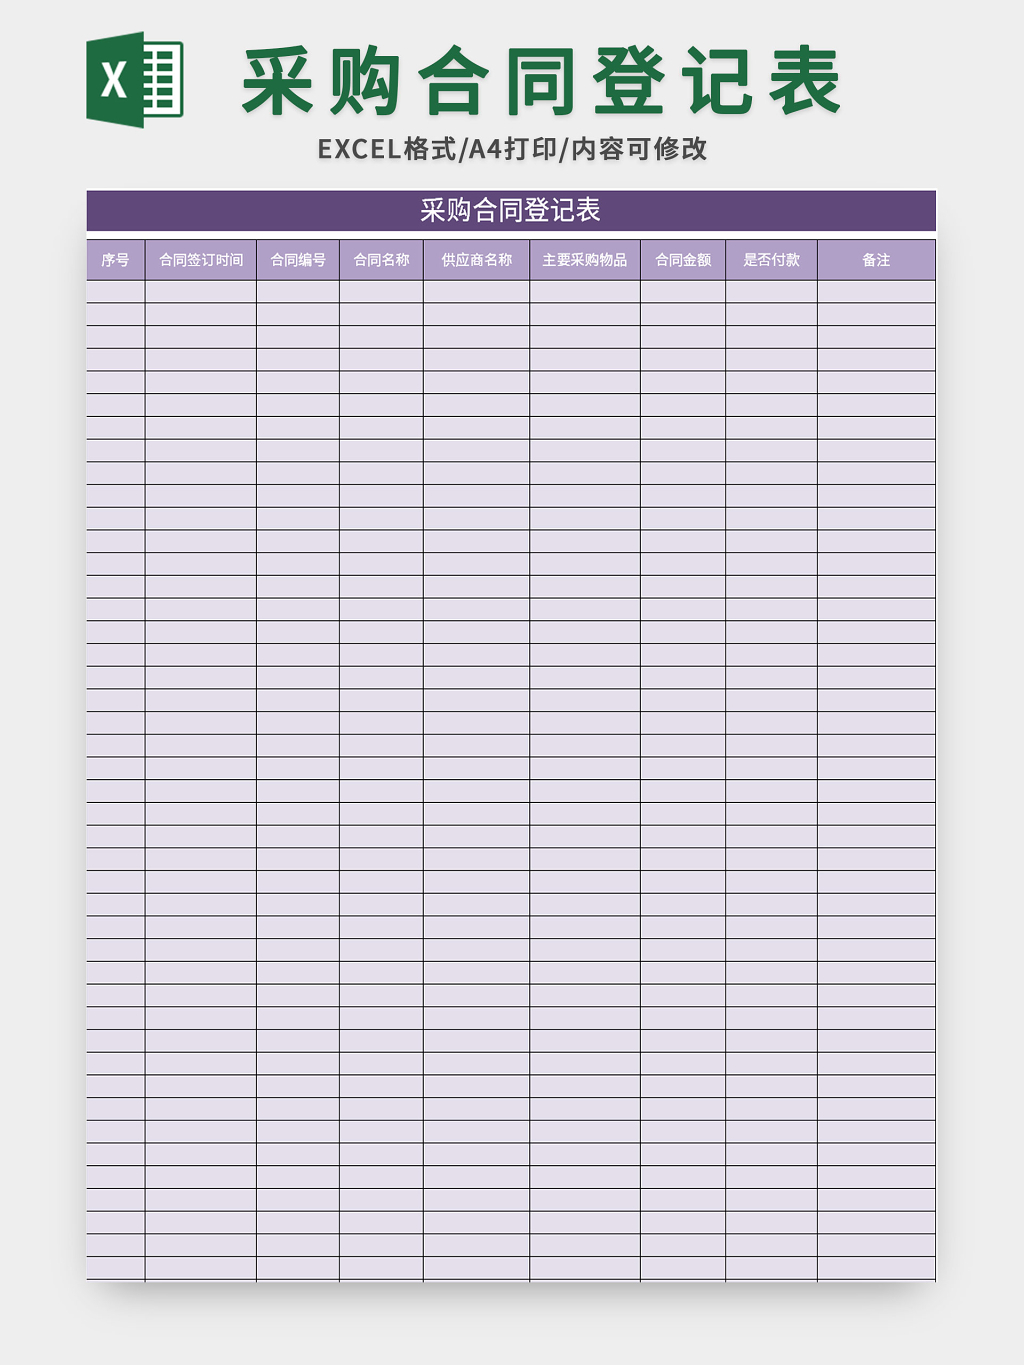 紫色采购合同登记表excel模板